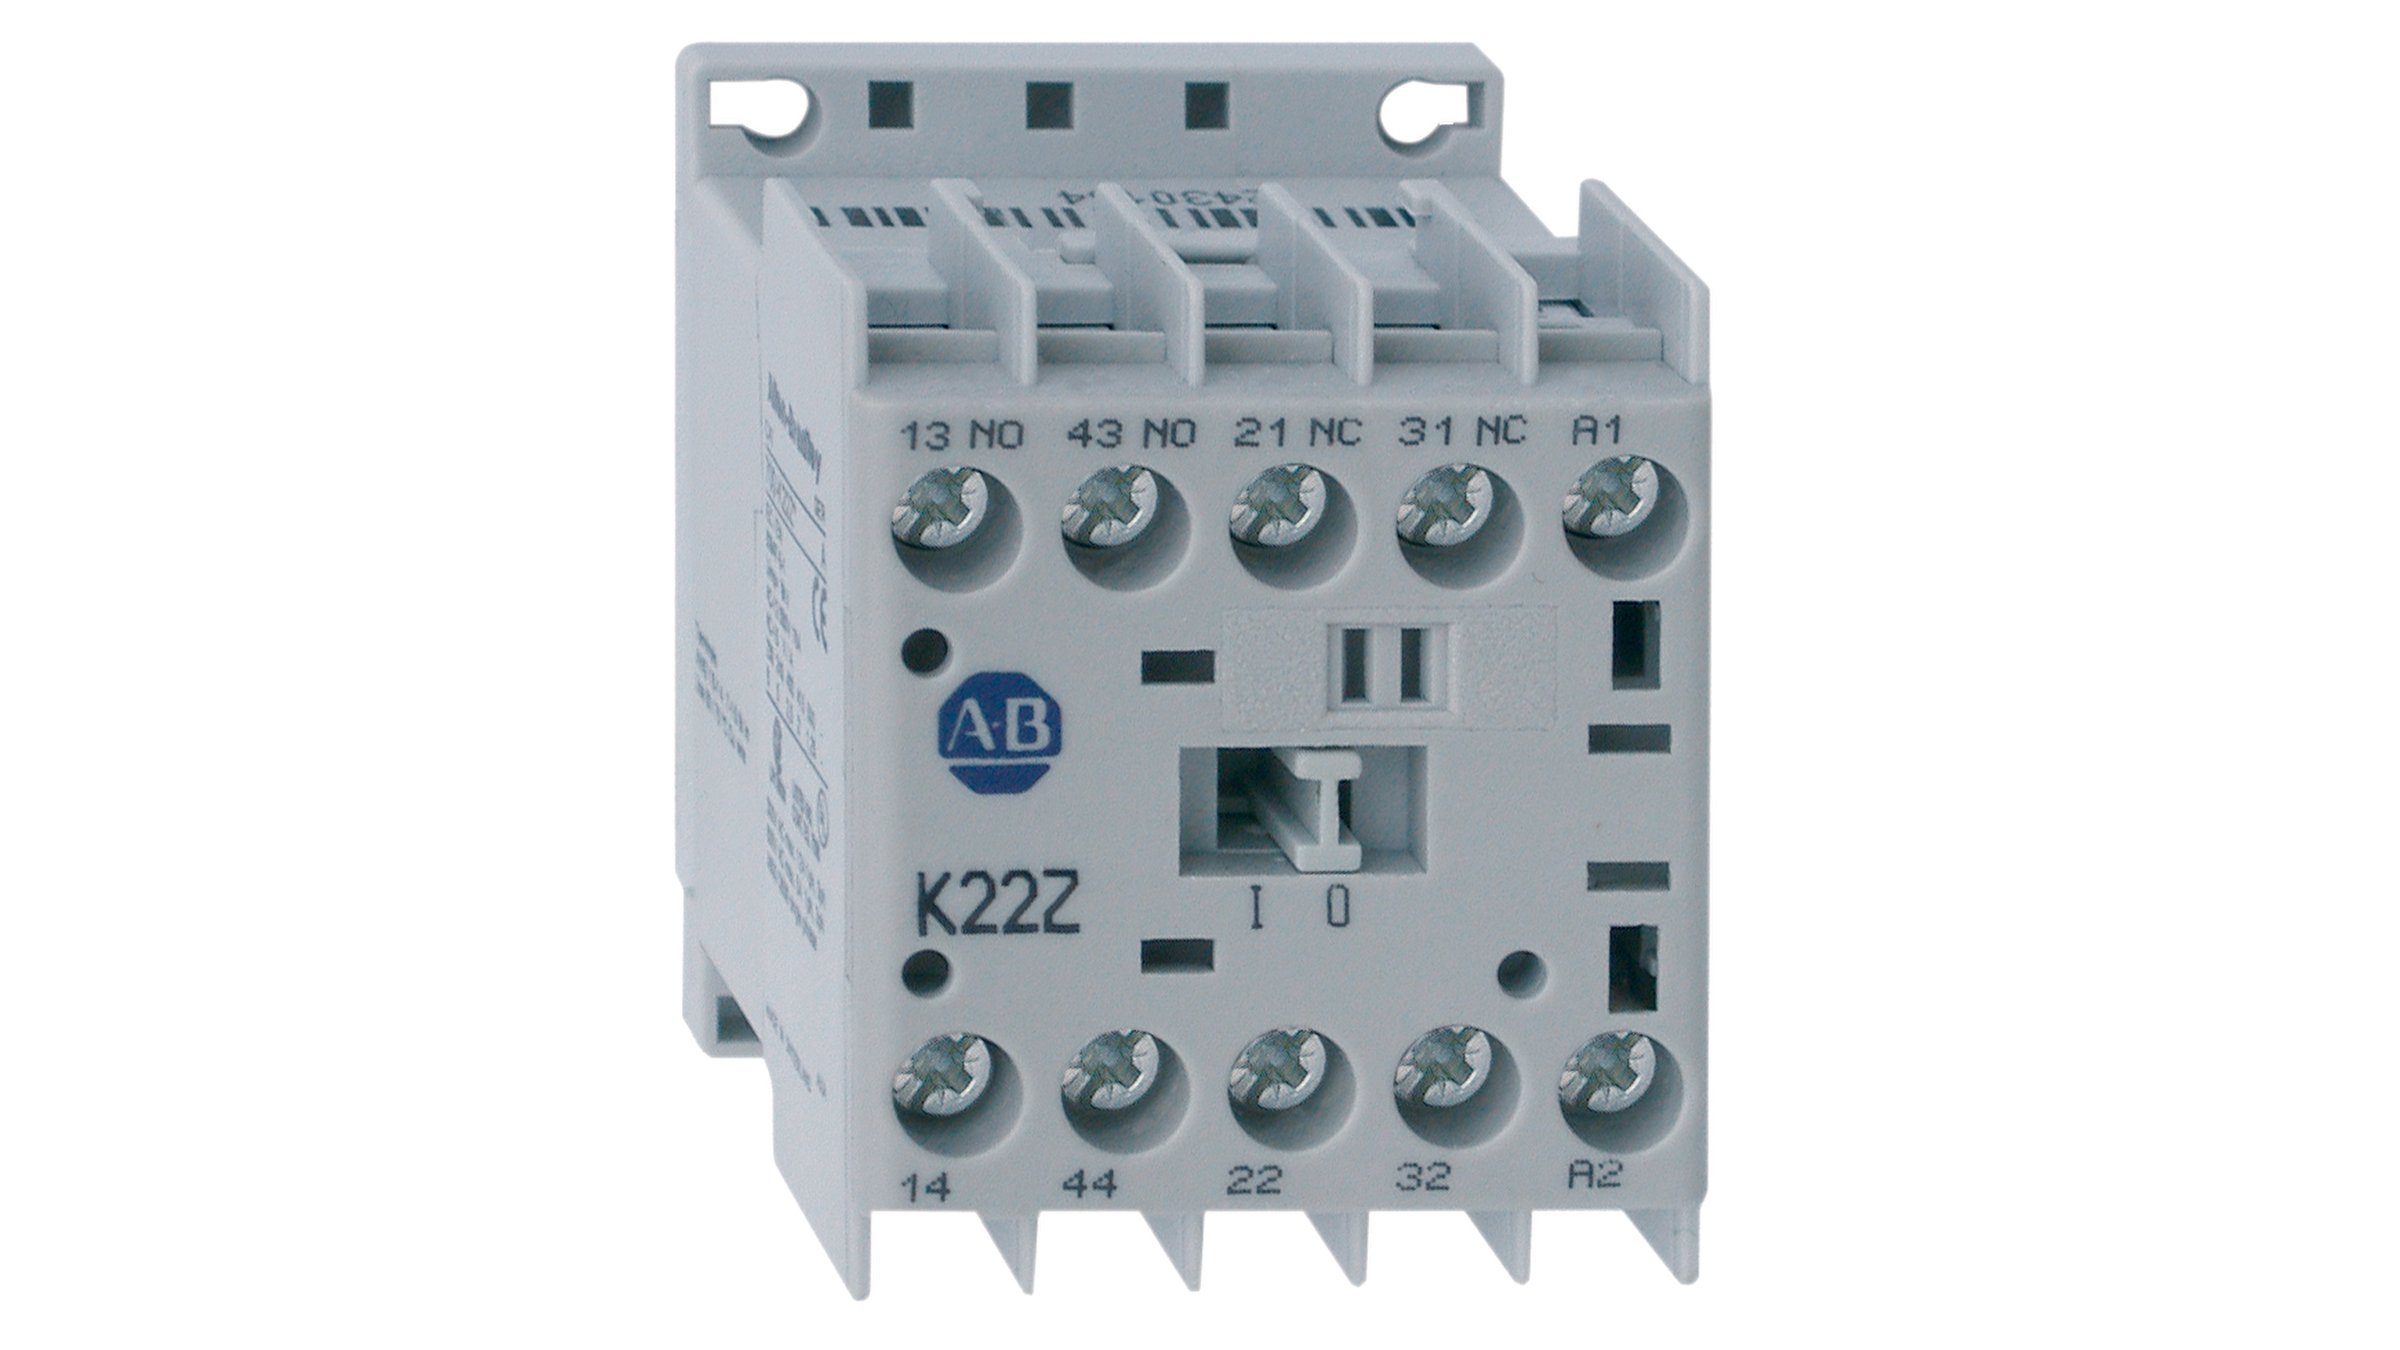 Allen-Bradley Bulletin 700-K IEC 控制继电器是体积小巧的工业继电器，能够开关低能量信号。